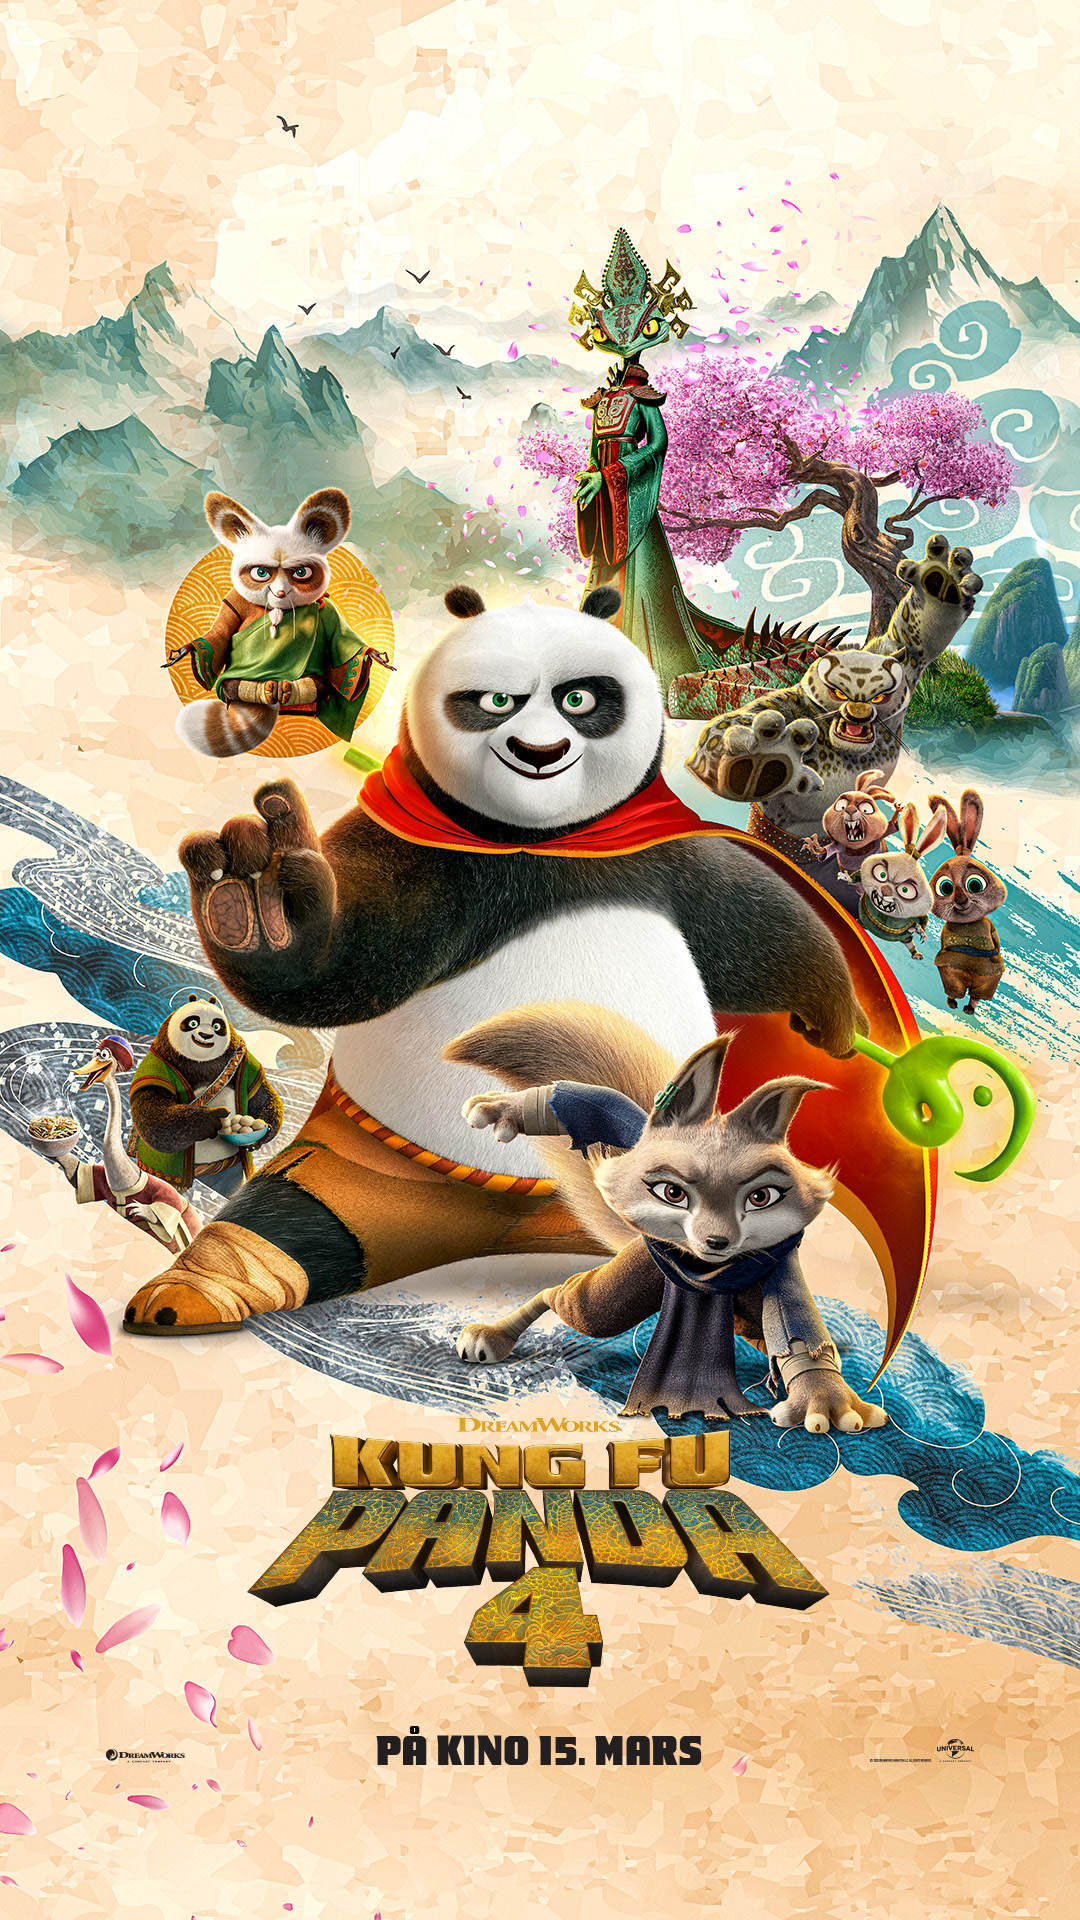 Kinoplakat for Kung Fu Panda 4